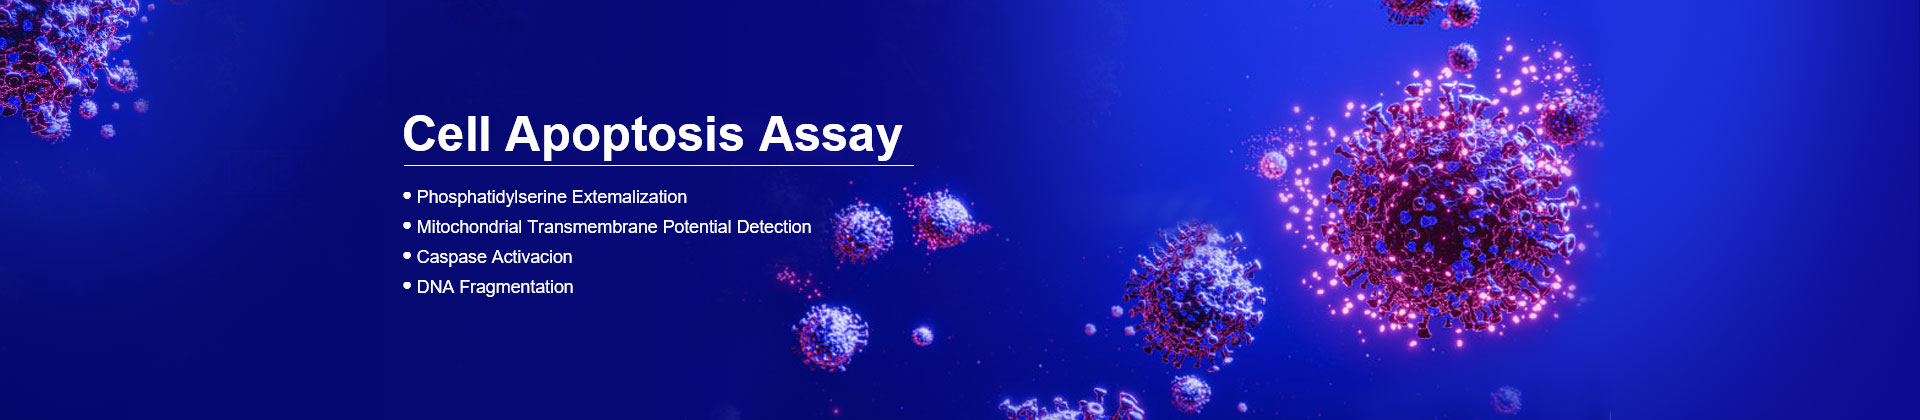 cell apoptosis assay